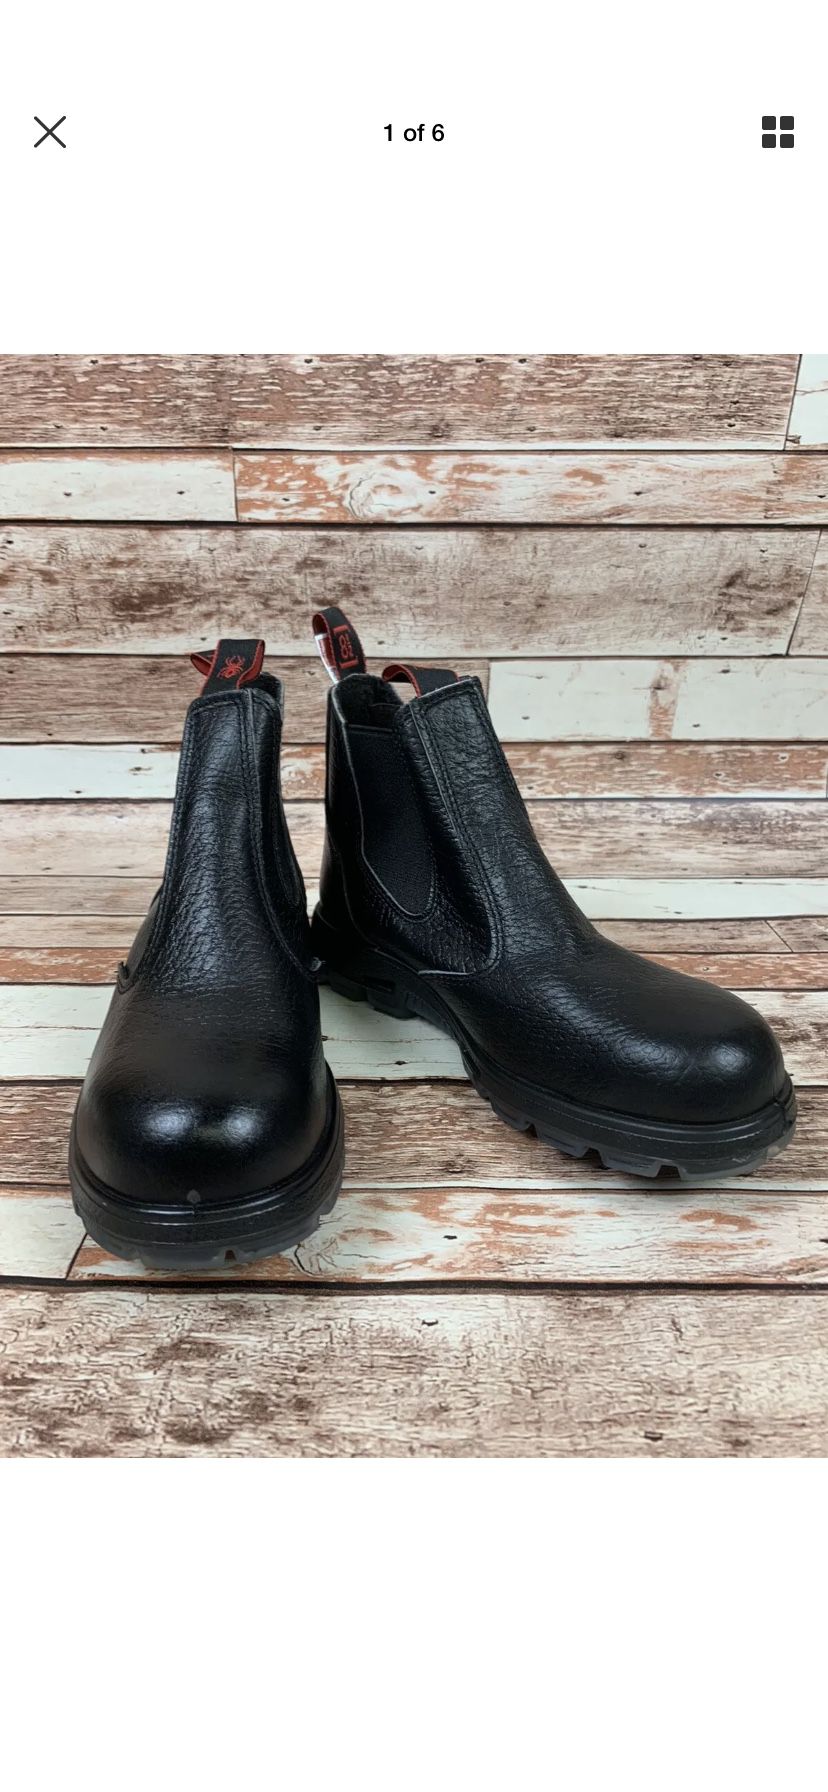 Brand new Redback boots hard toe US size 9.5 UK size 8.5